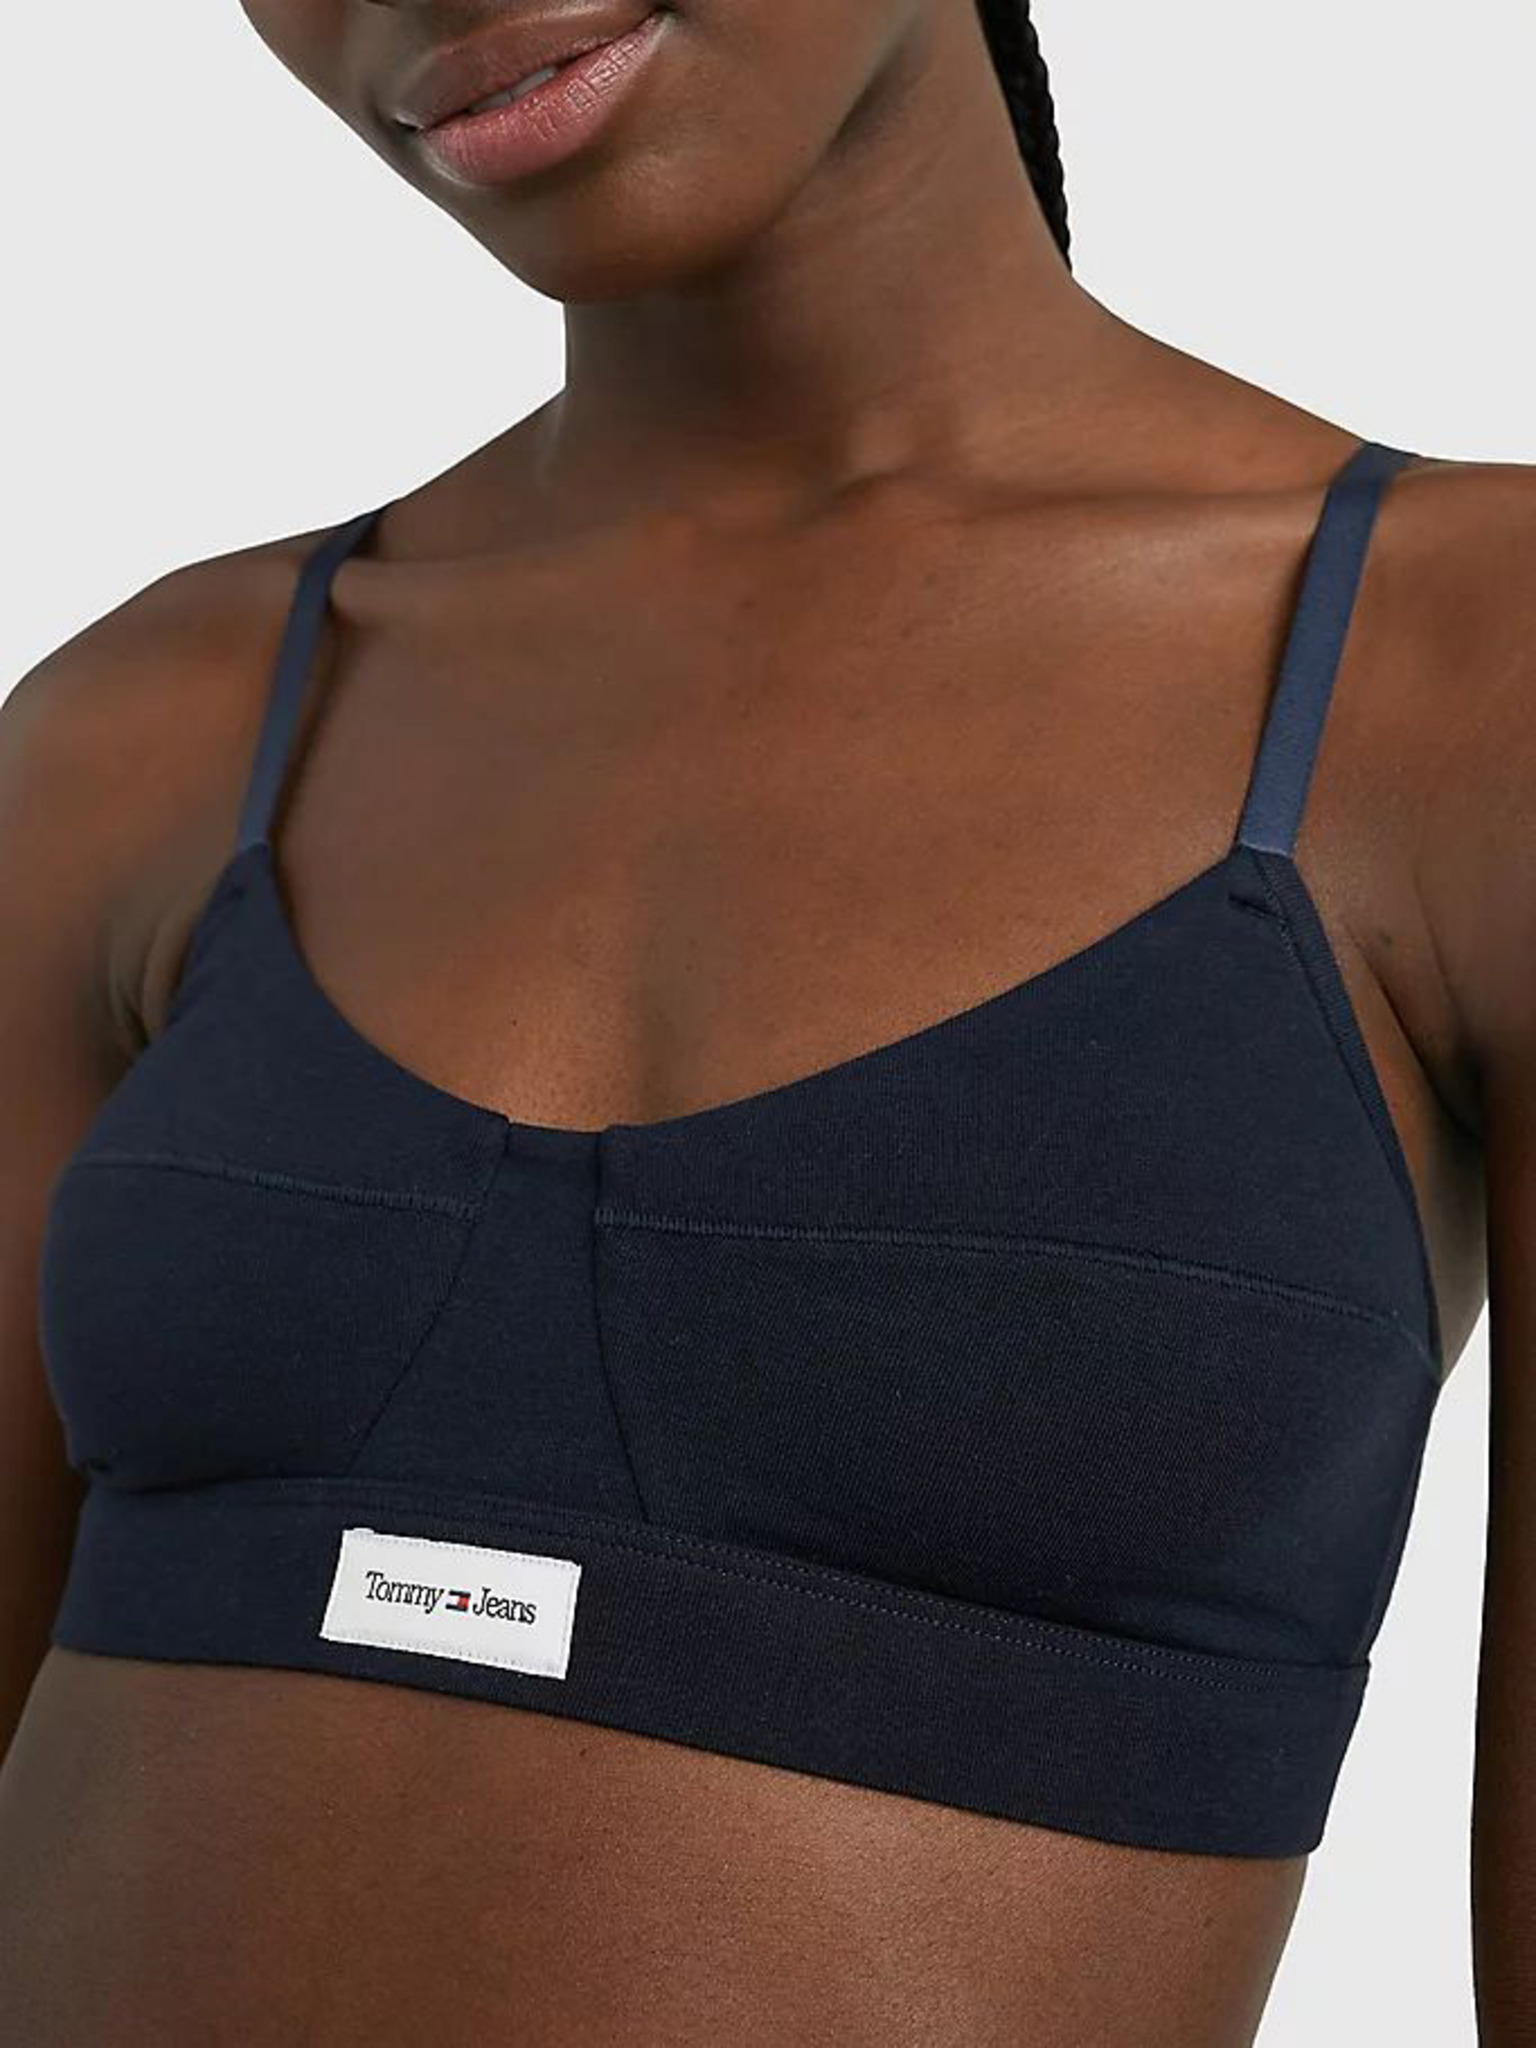 Tommy Hilfiger Women's Cotton Unpadded Sports Bra Bralette Black New -  Medium